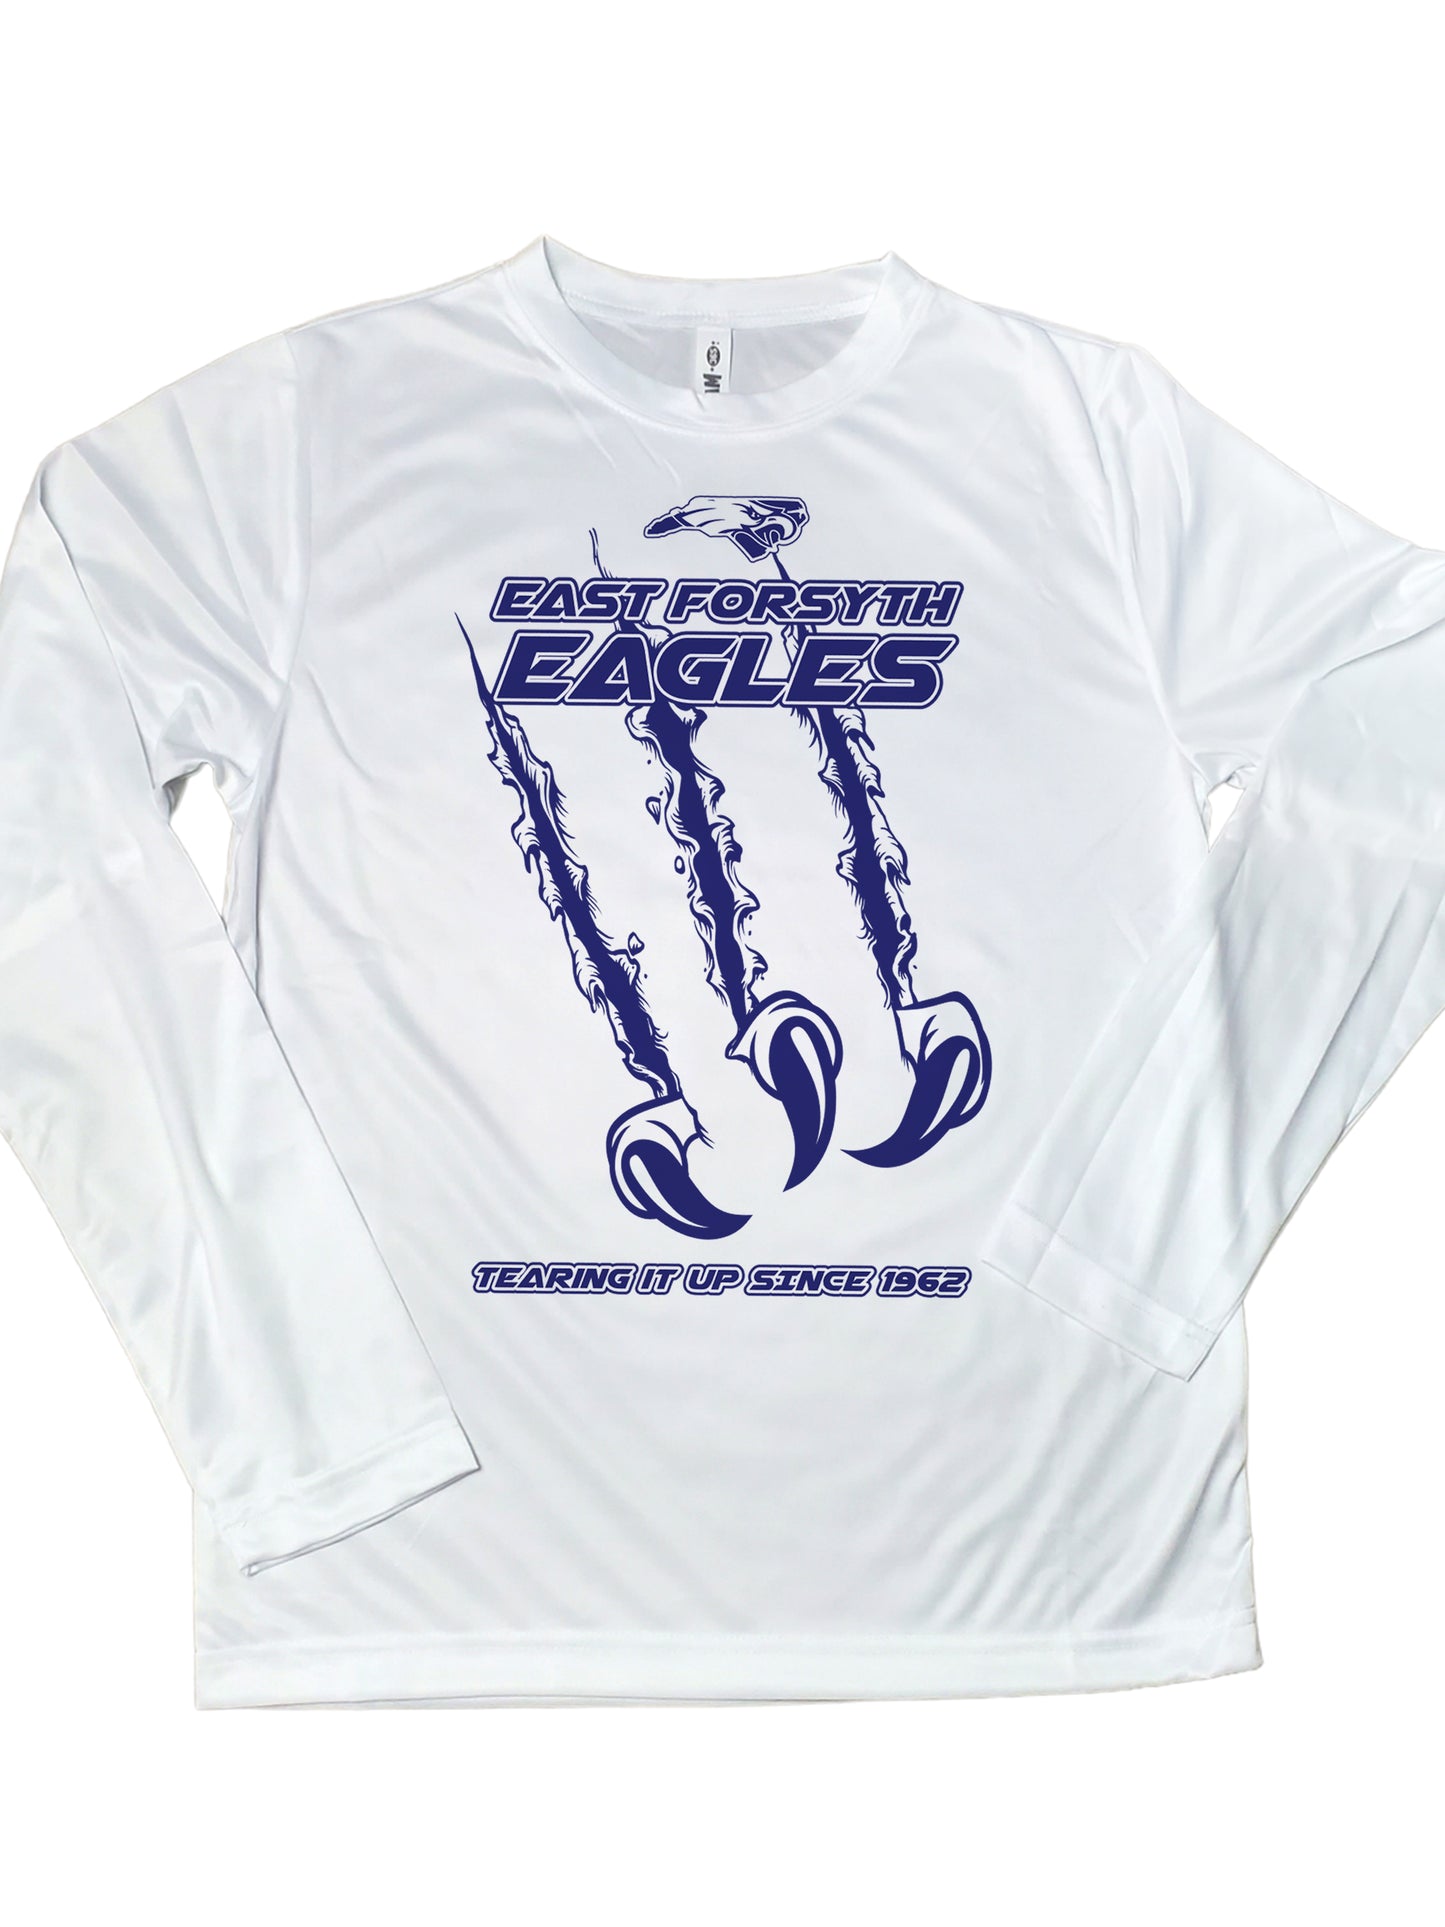 Talon Tee Long Sleeve Performance Shirt, Fighting Eagles Shirt